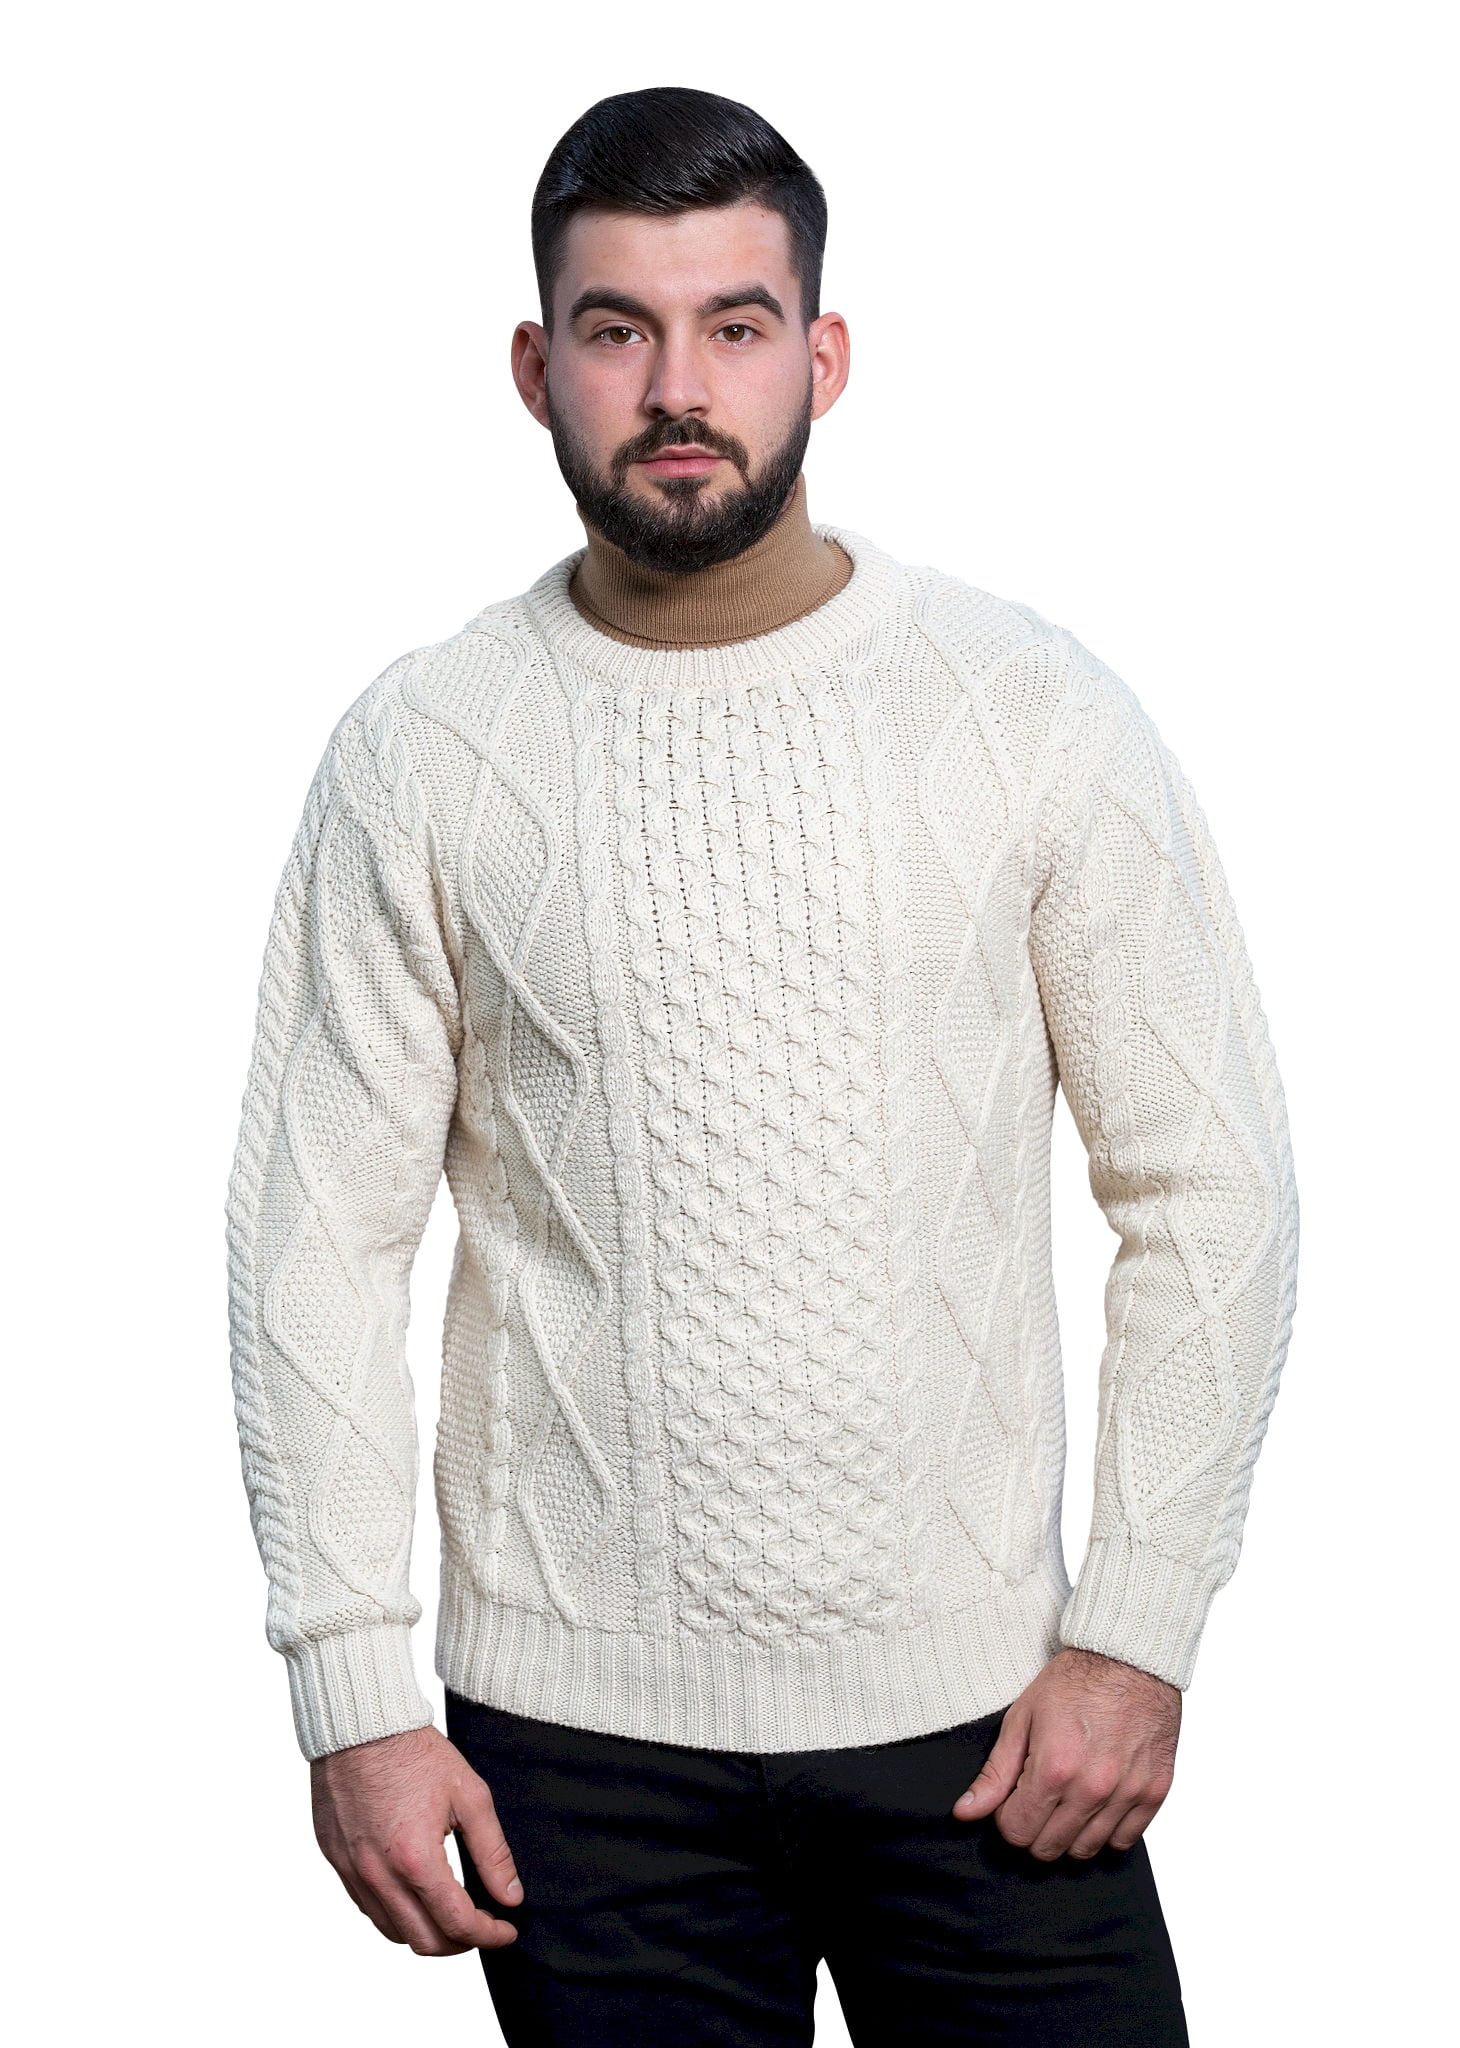 SAOL - SAOL Irish Sweater for Men Cable Knit Fisherman Aran Pullover ...